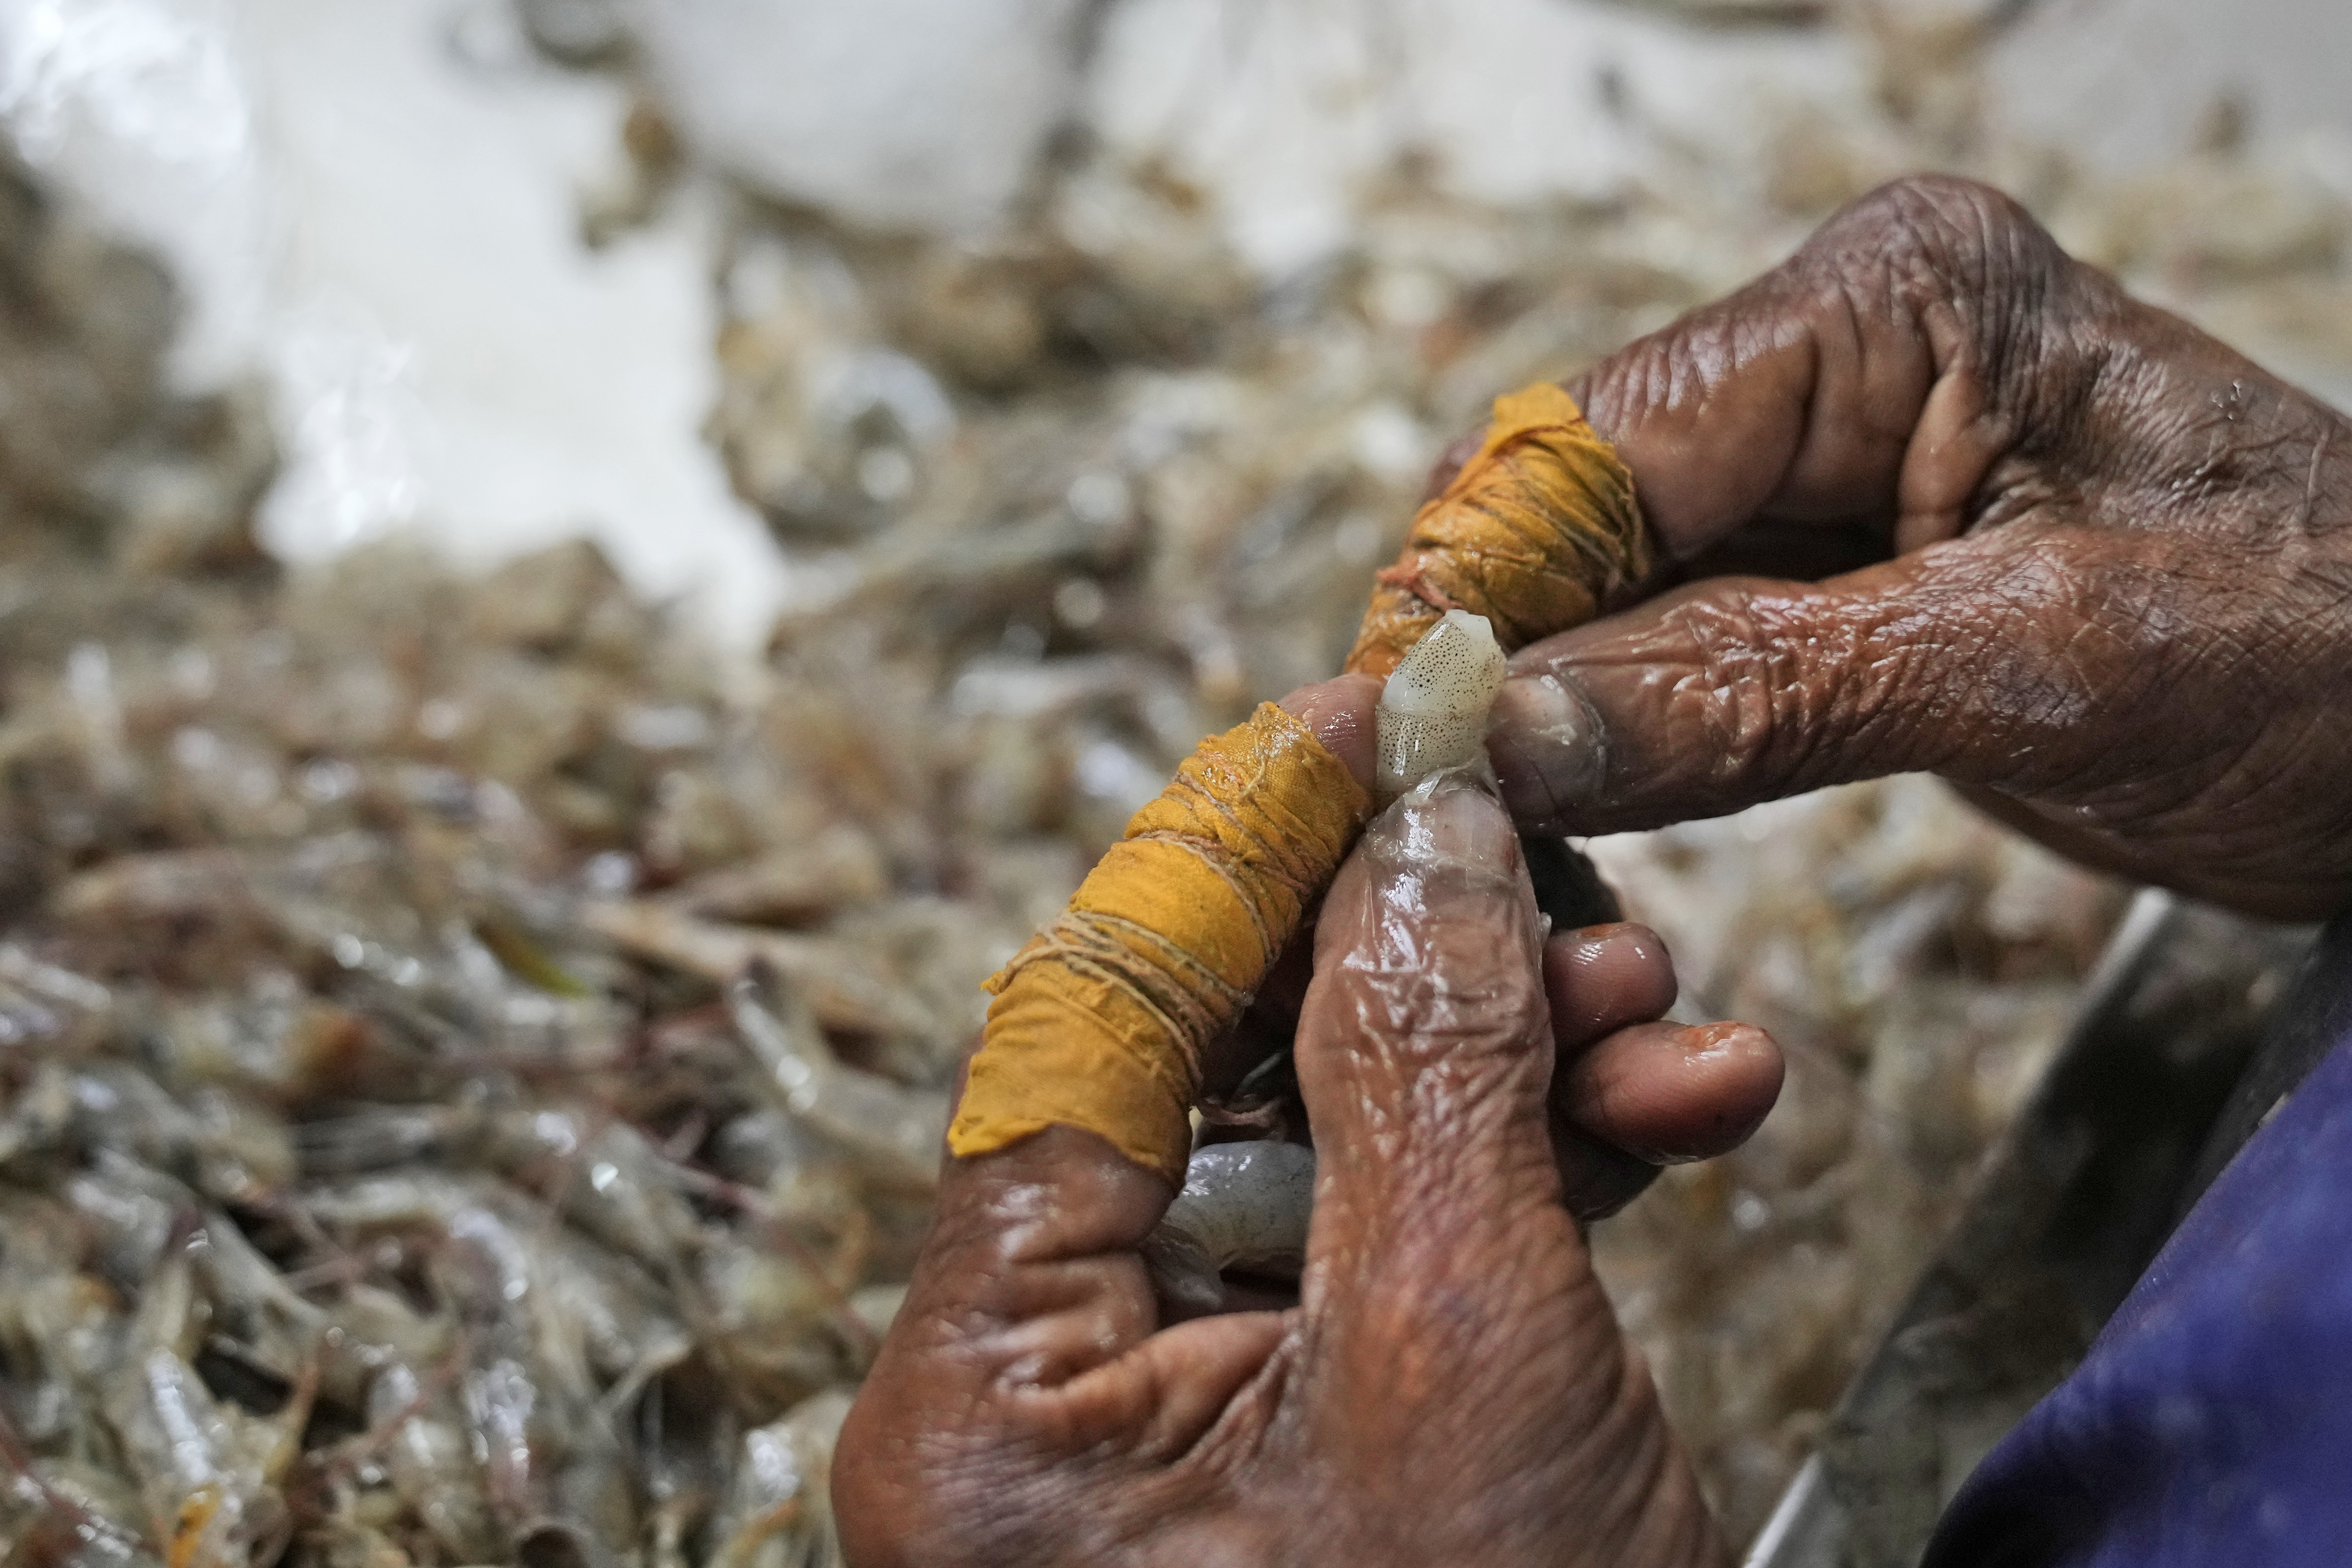 Report calls Indian shrimp industry 'dangerous and abusive